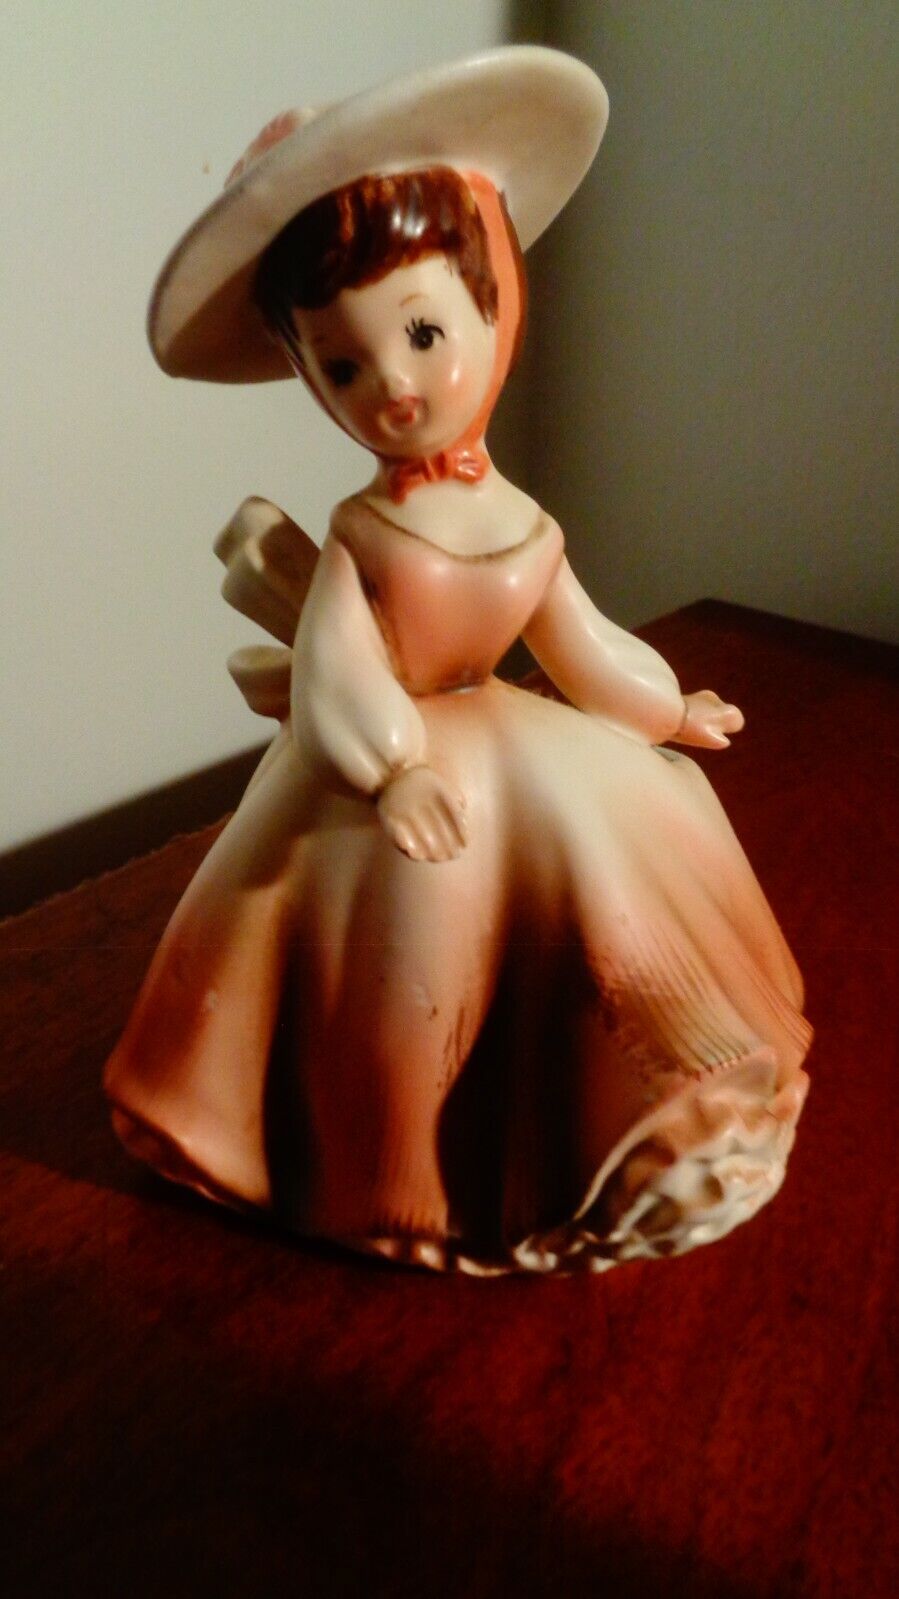 Vintage Beautiful Napco Ware Southern Belle Napkin Holder Girl Doll Figurine 